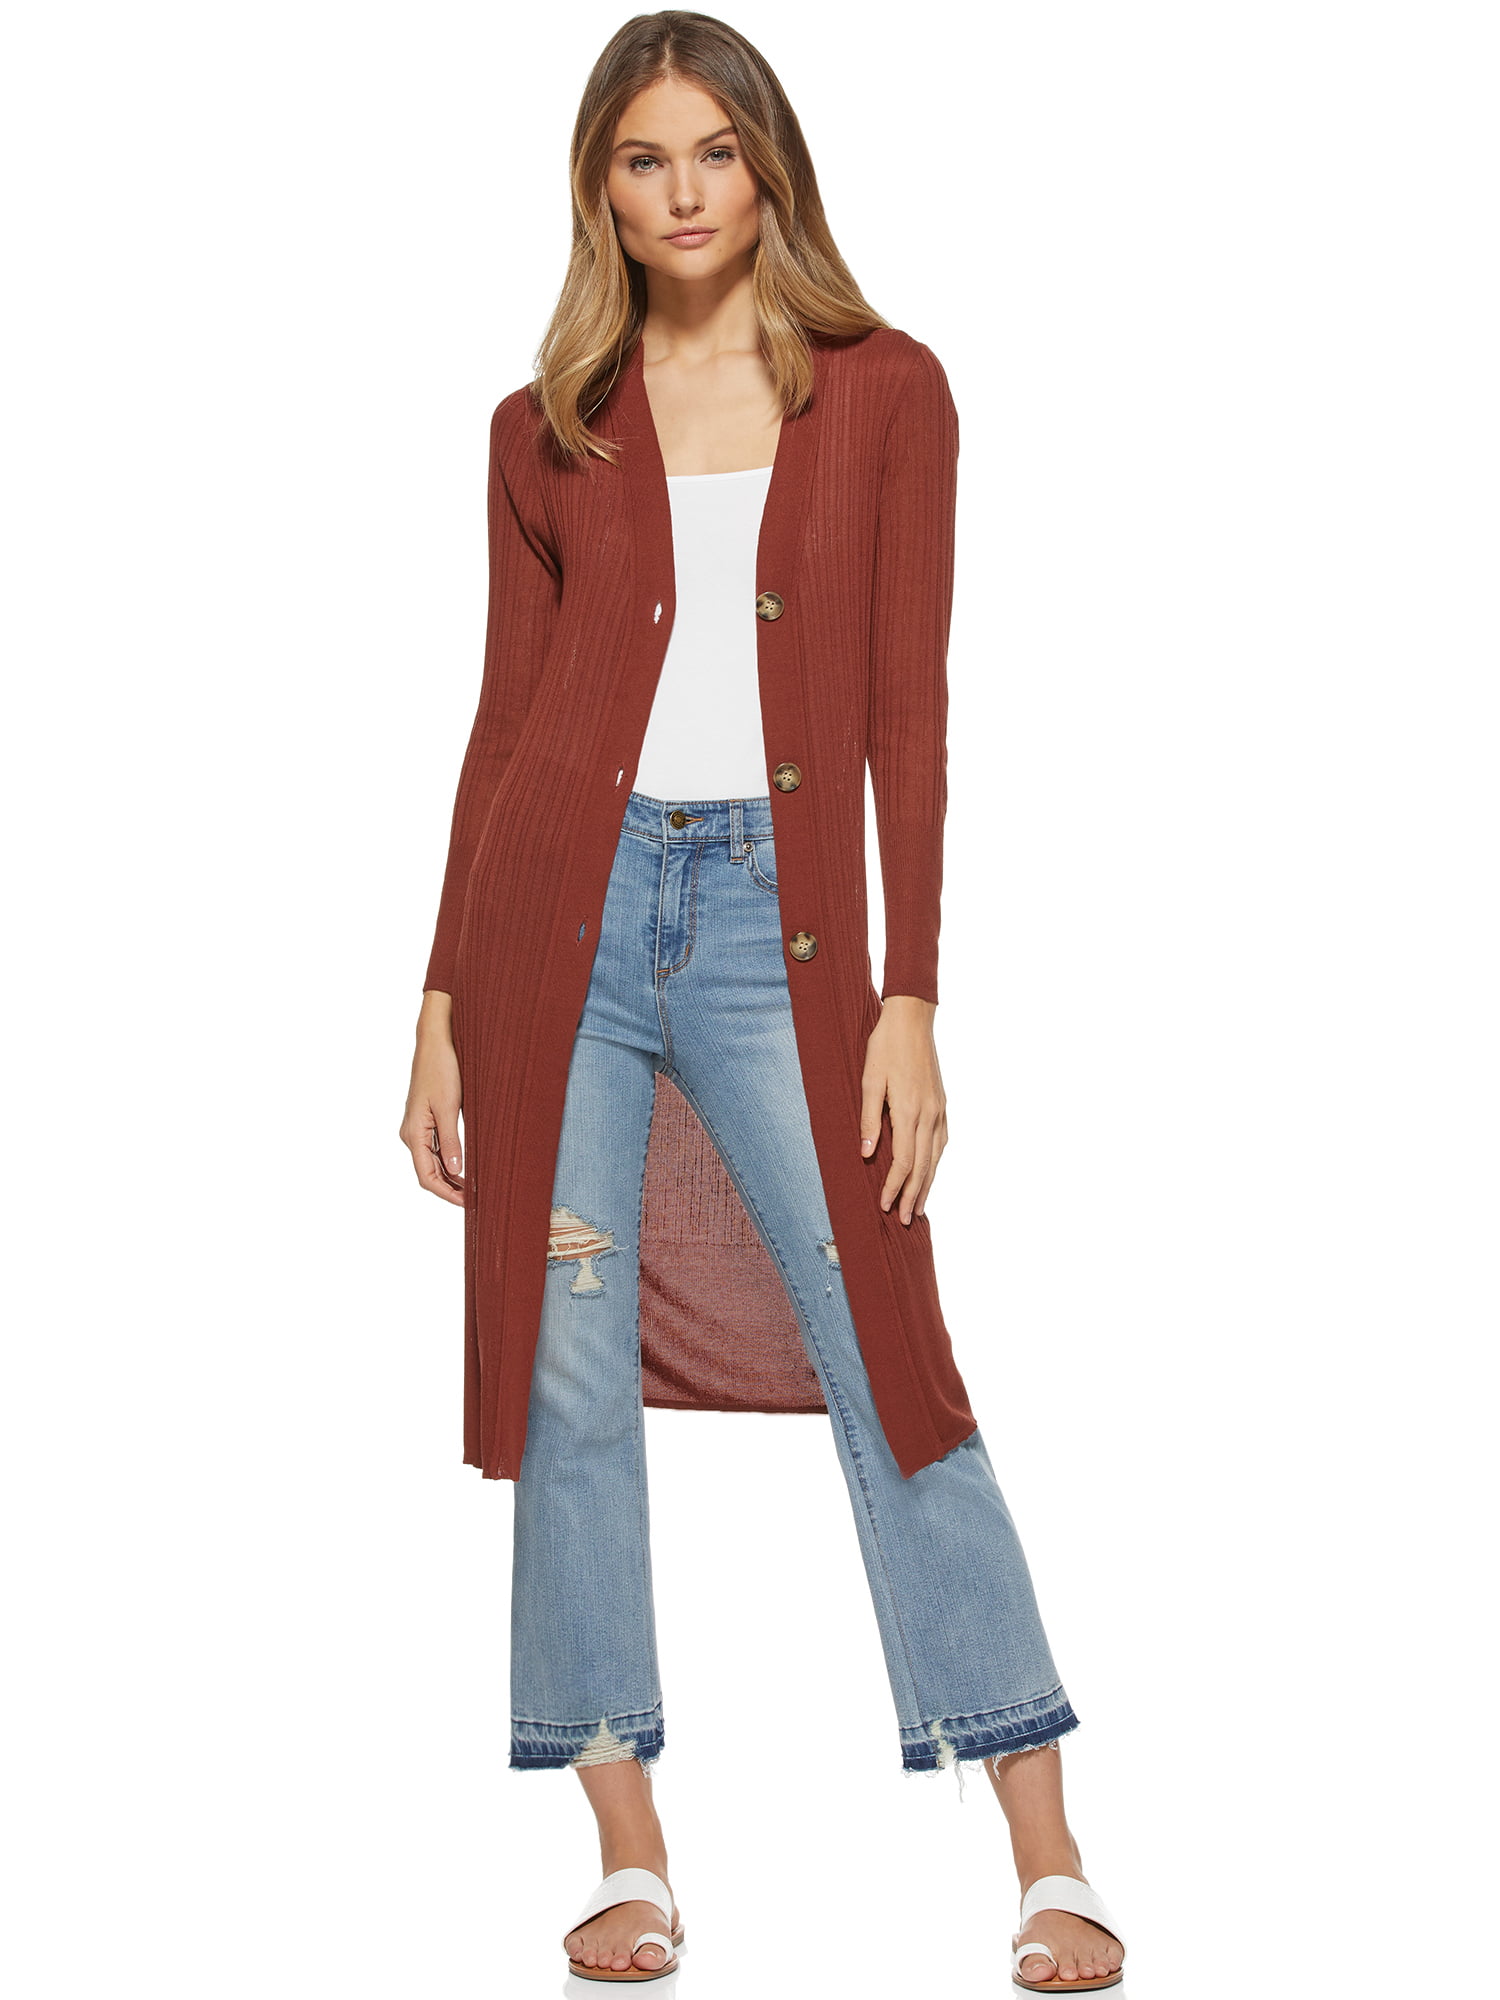 Scoop Women's Long Cardigan Button Front Knit Sweater - Walmart 